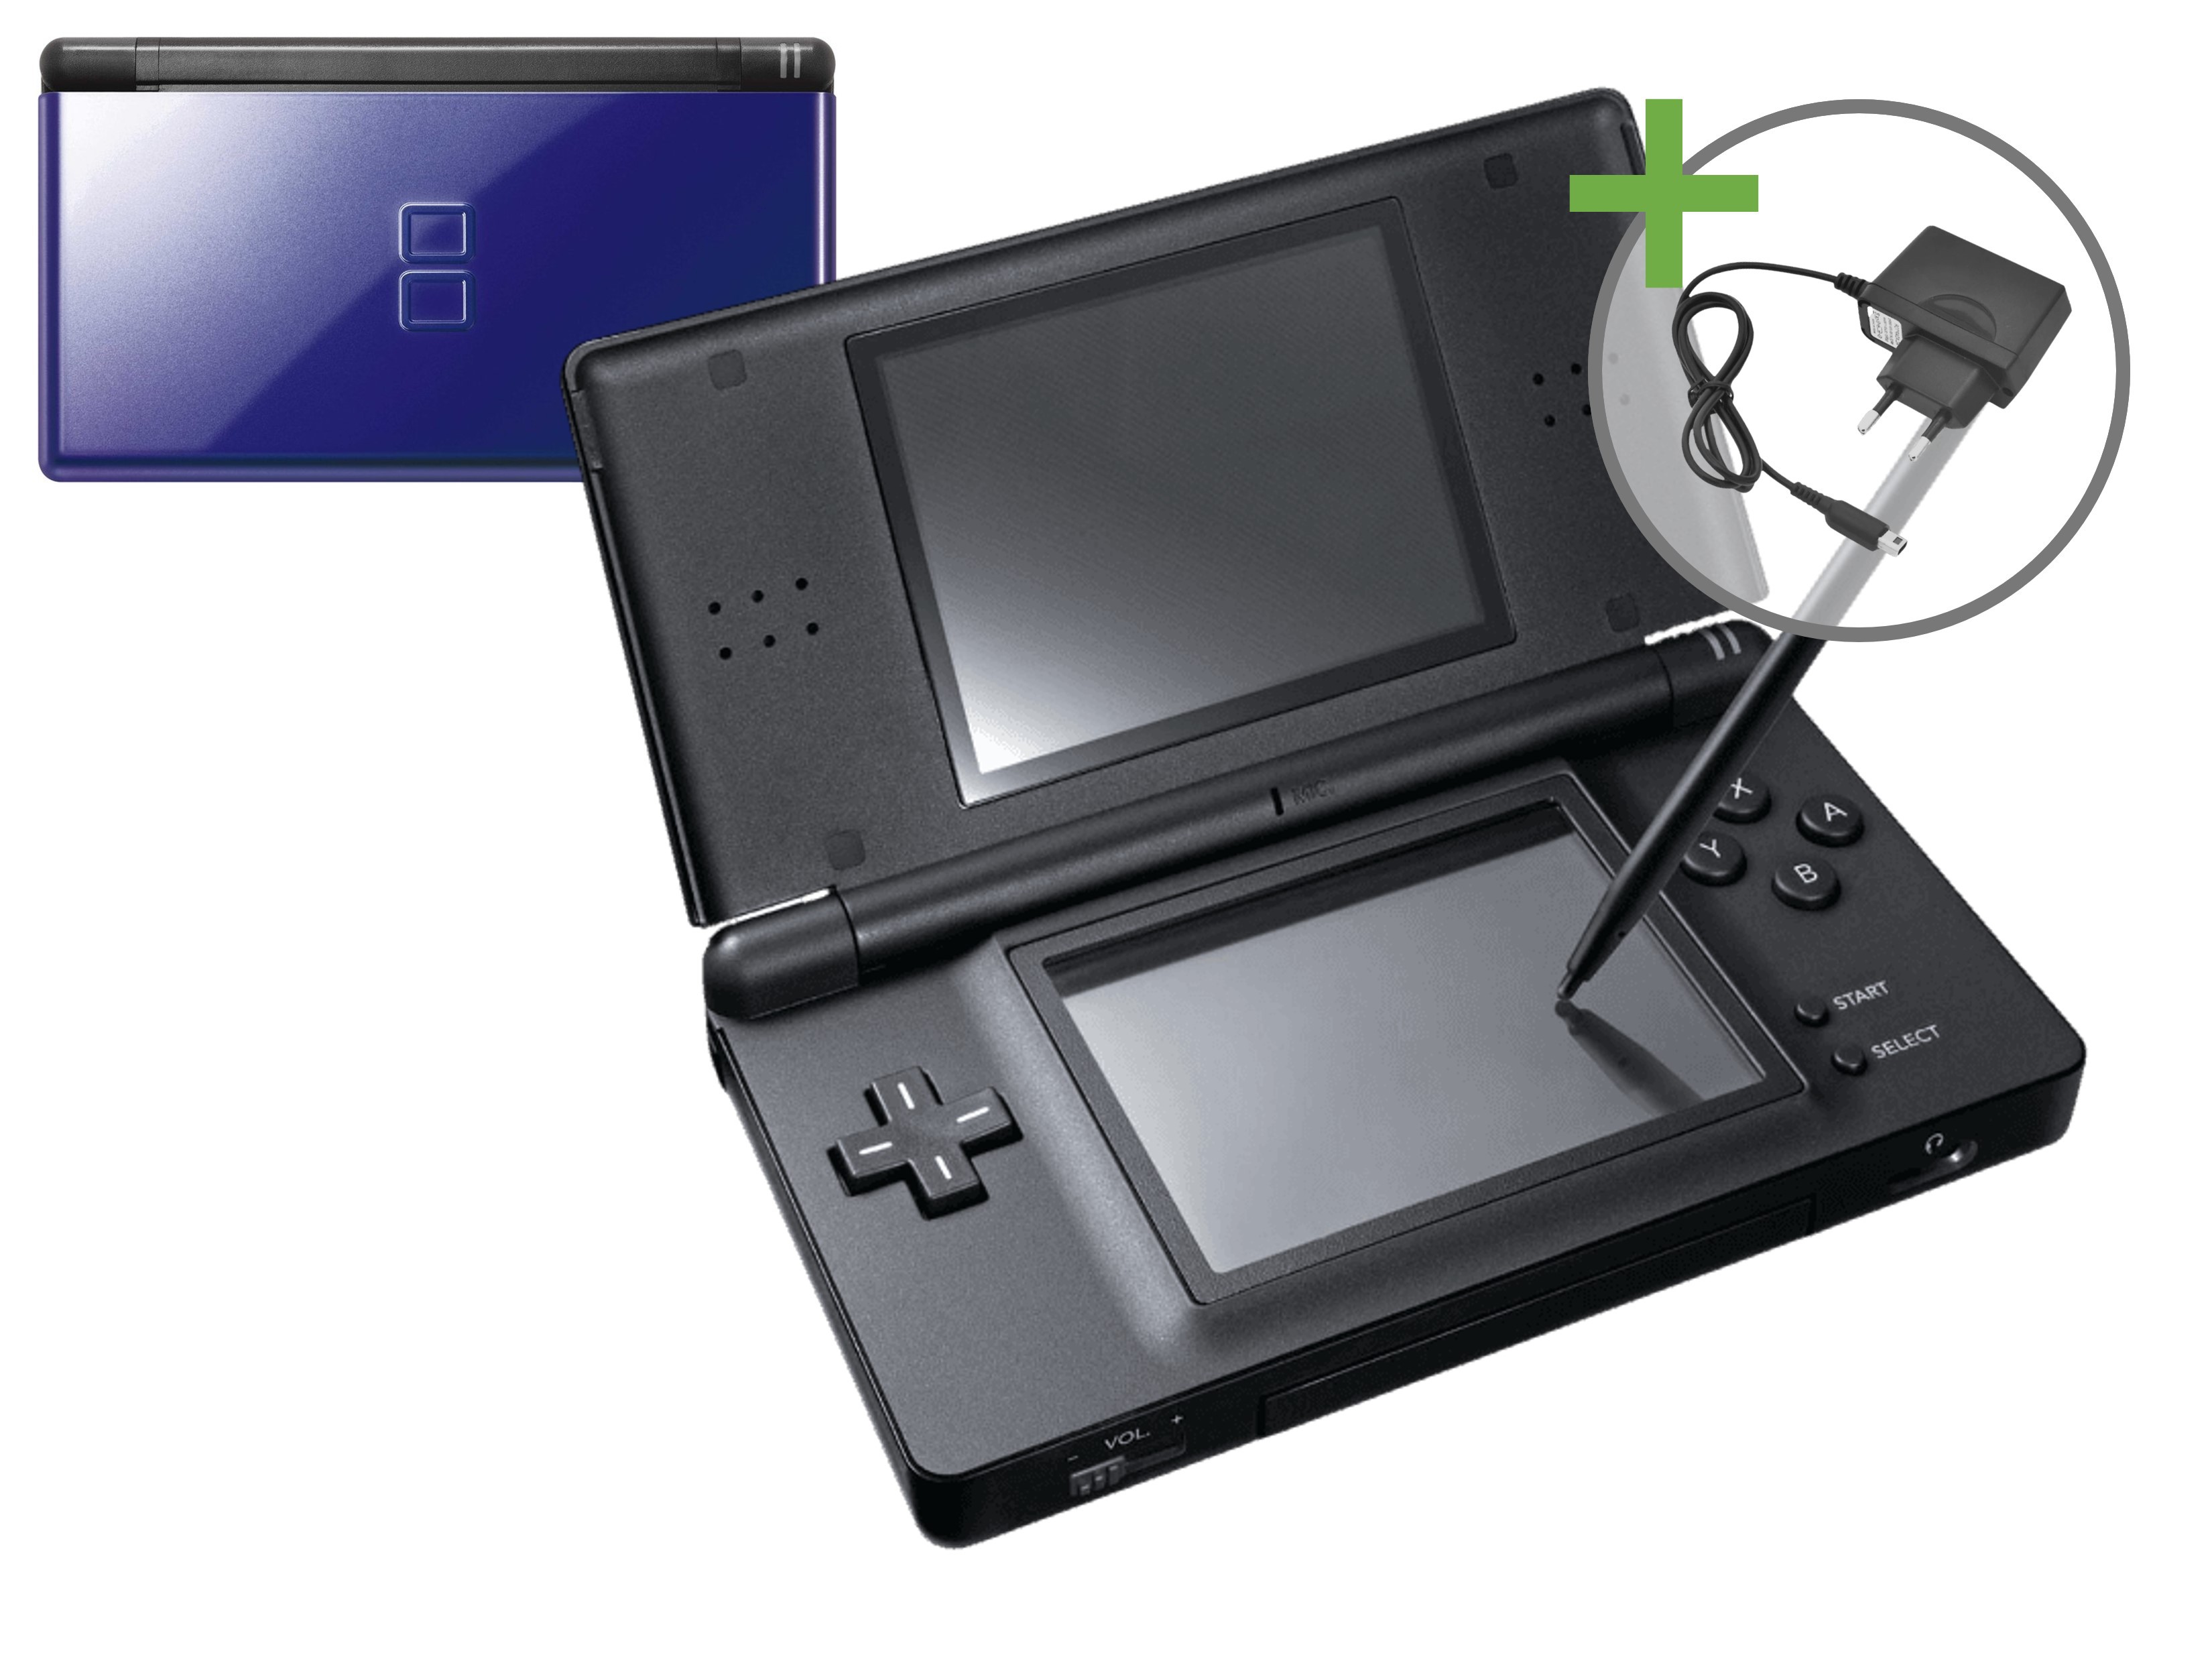 Nintendo DS Lite - Black/Blue - Nintendo DS Hardware